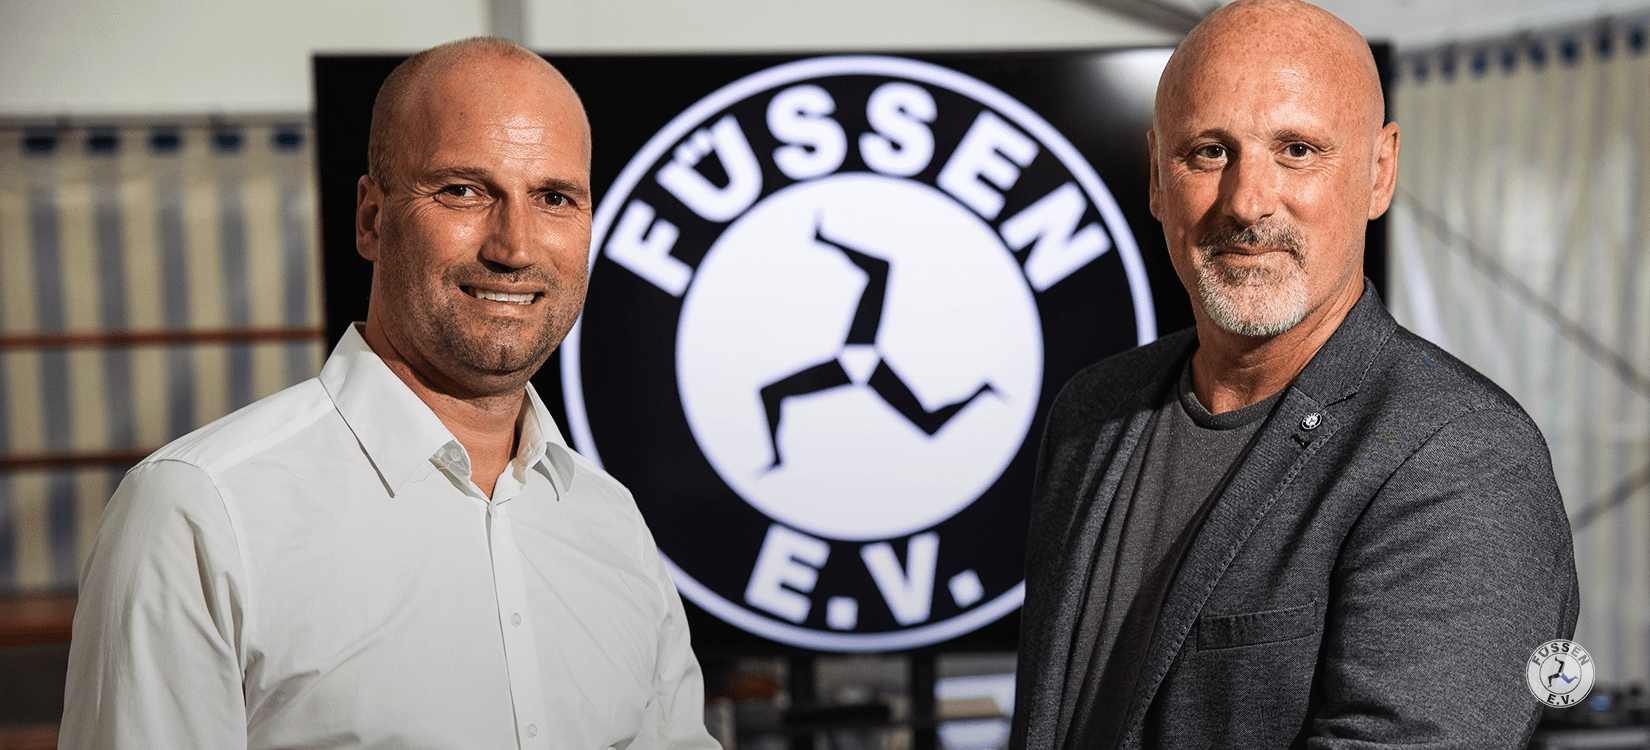 Frederik Ledlin wird neuer Coach des Füssener DNL-Teams